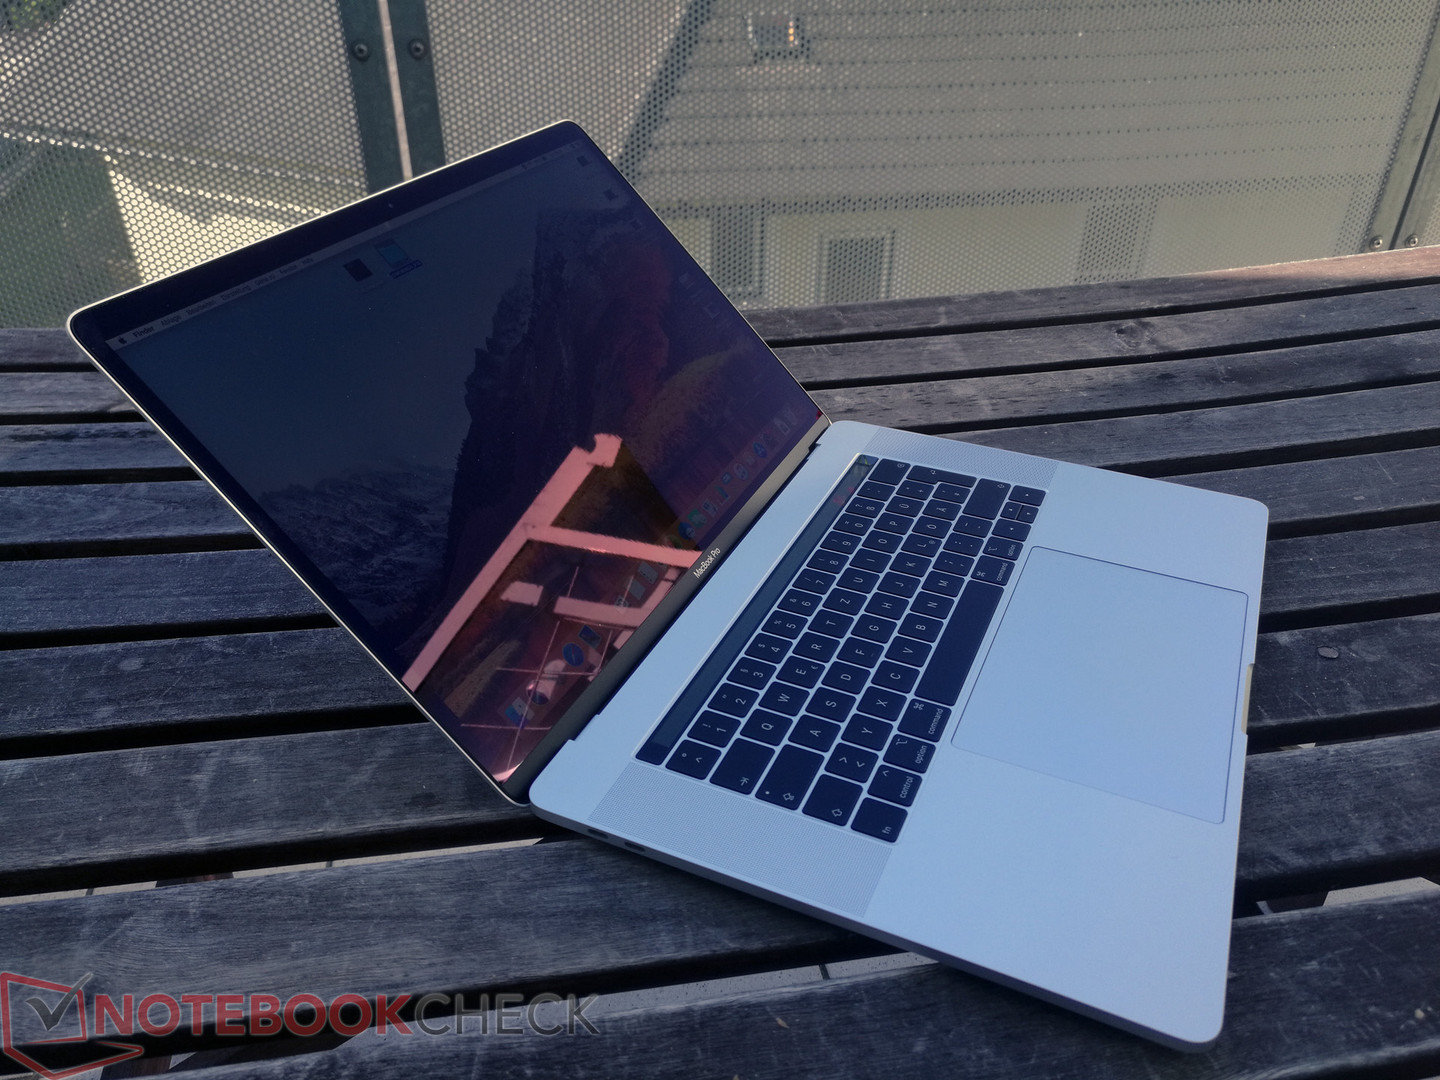 Apple's new 2018 15-inch MacBook Pro - CNET